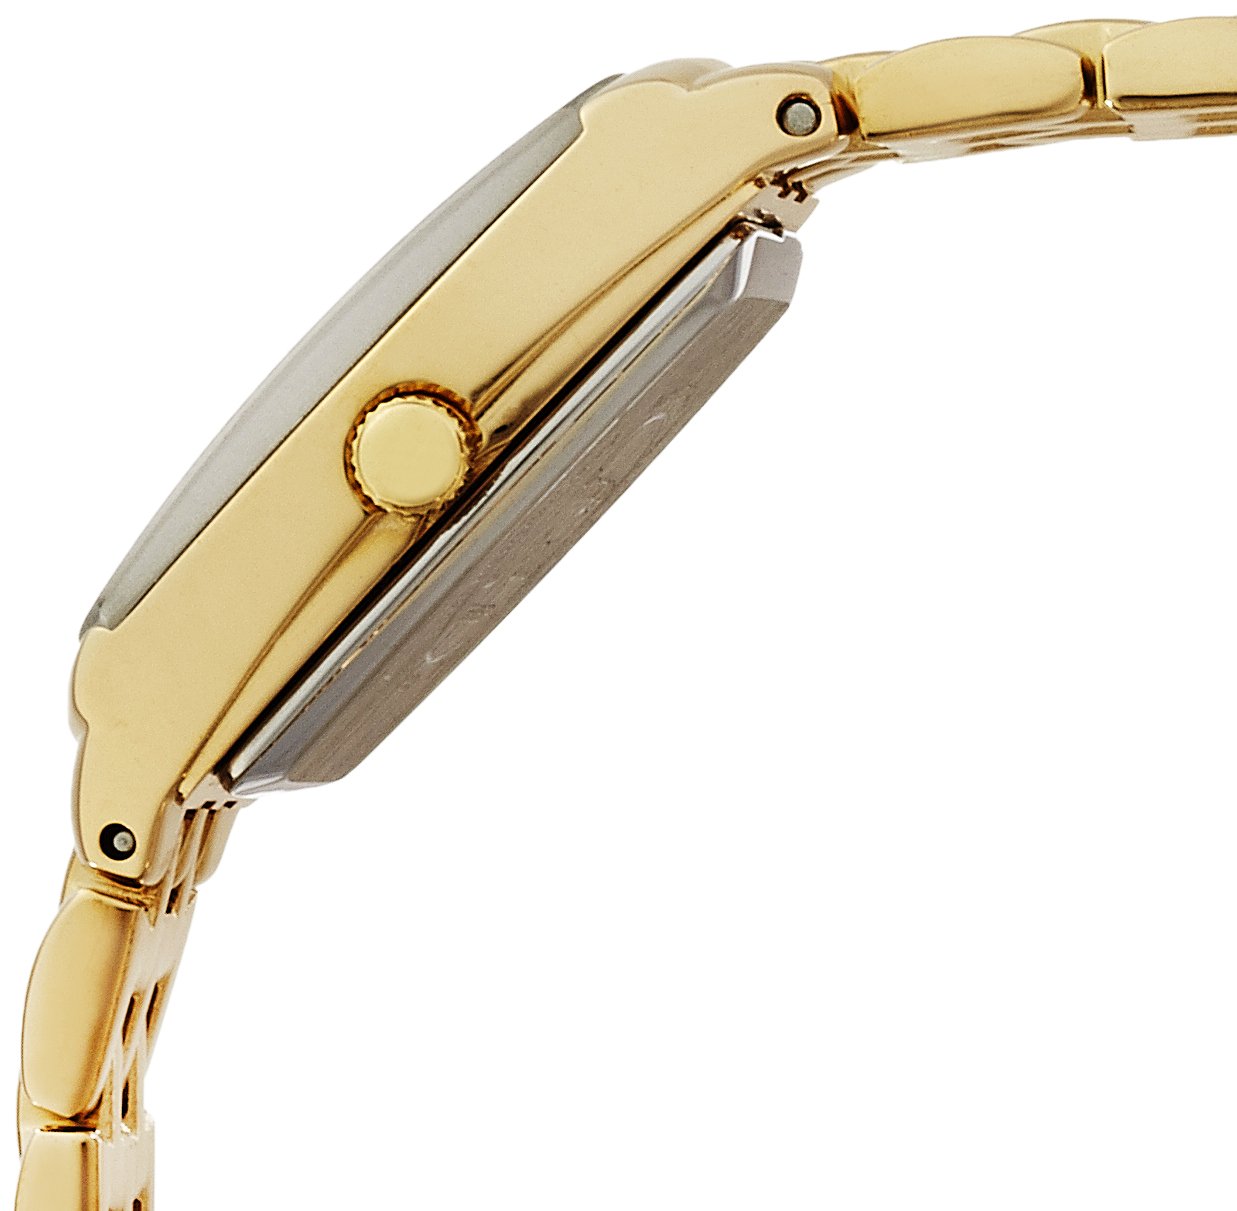 Armitron Women's 75/5195 Diamond Accented Bracelet Watch